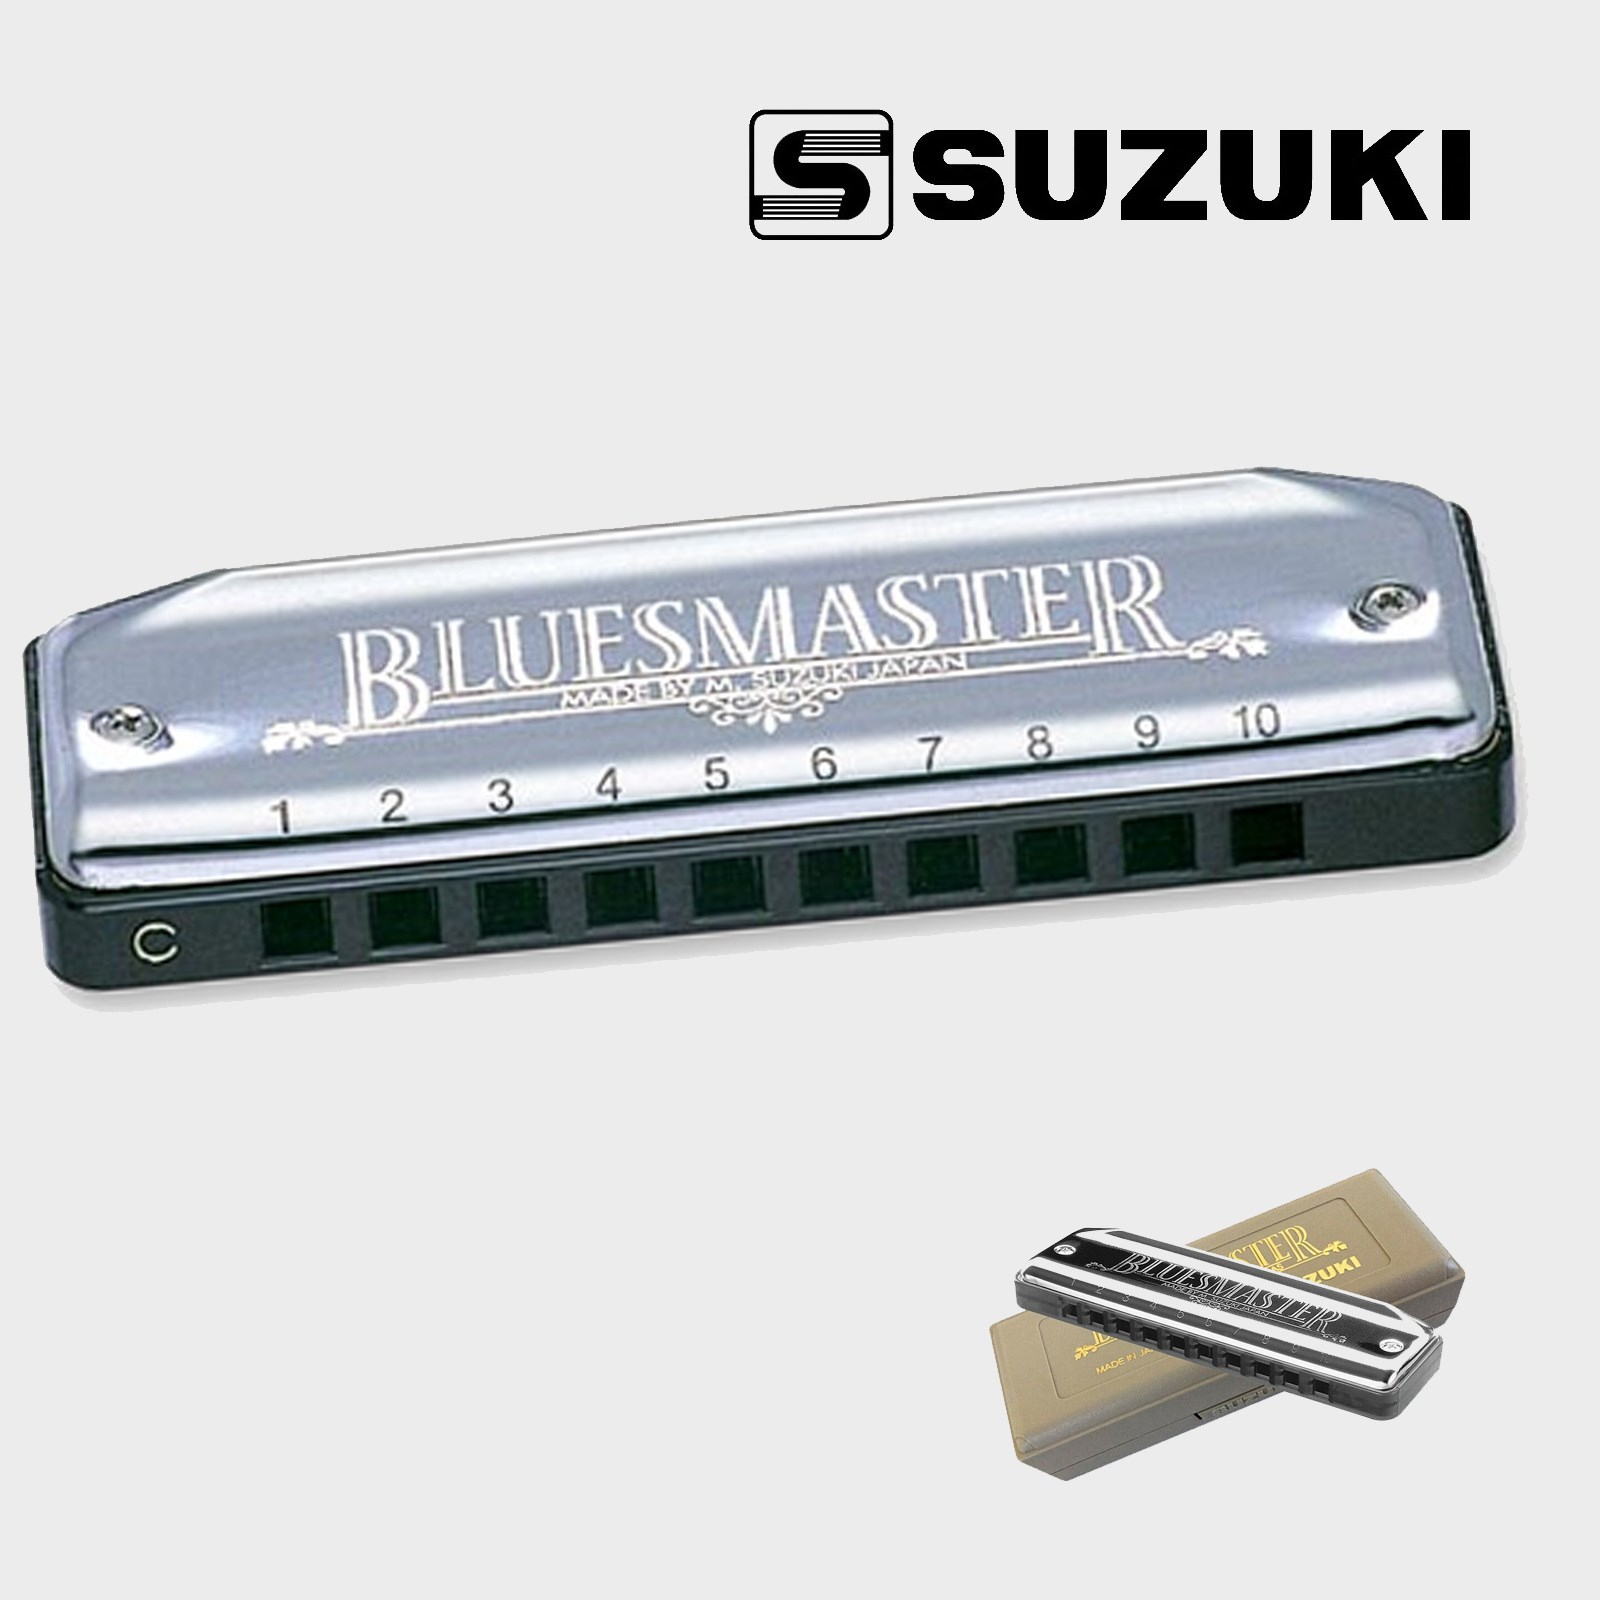 Suzuki Bluesmaster key of F